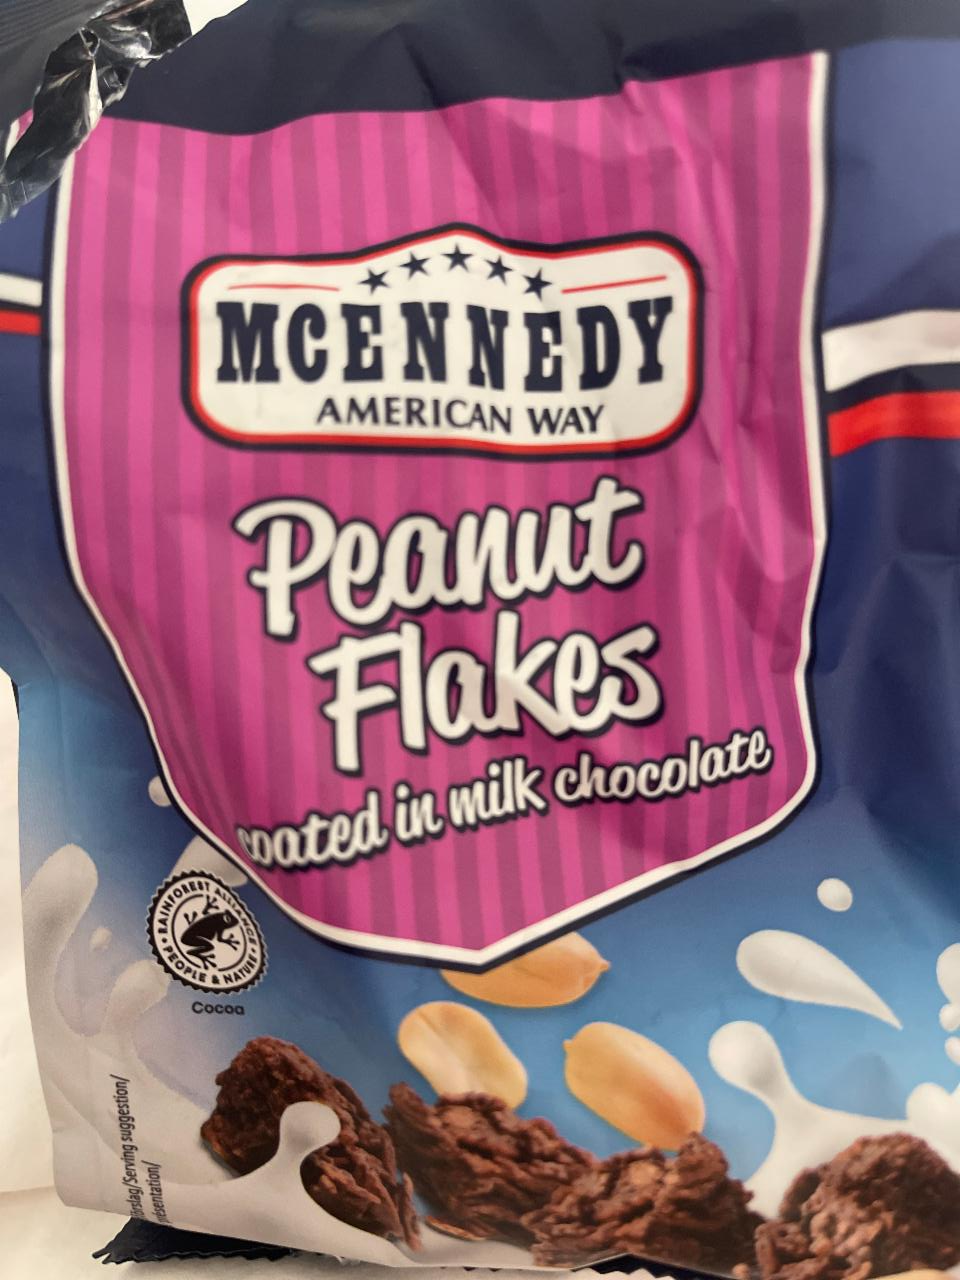 Fotografie - Peanut flakes in milk chocolate McEnnedy American Way